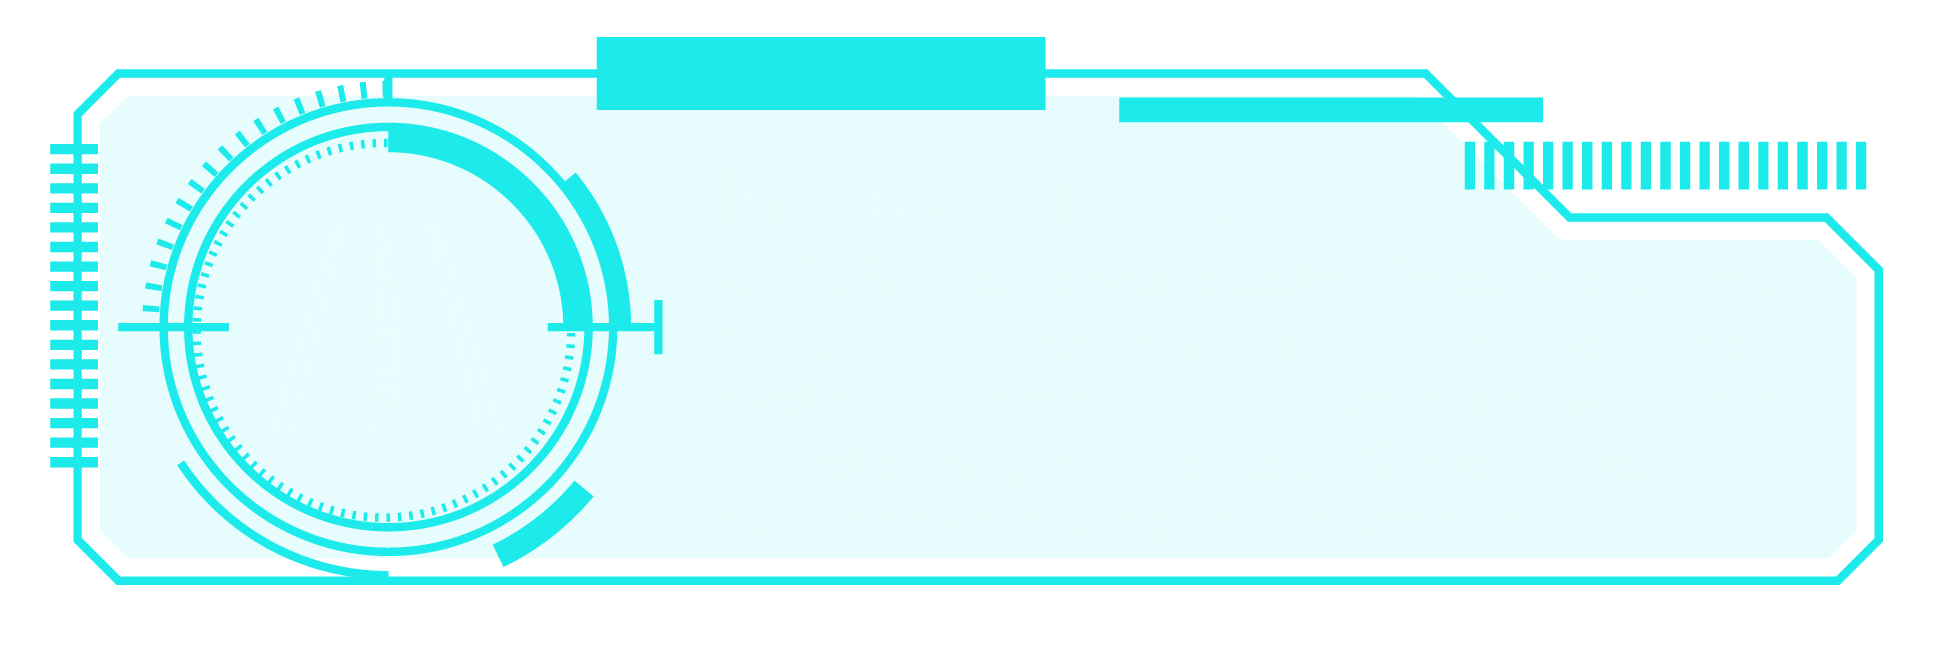 Infraestructura_texto-03